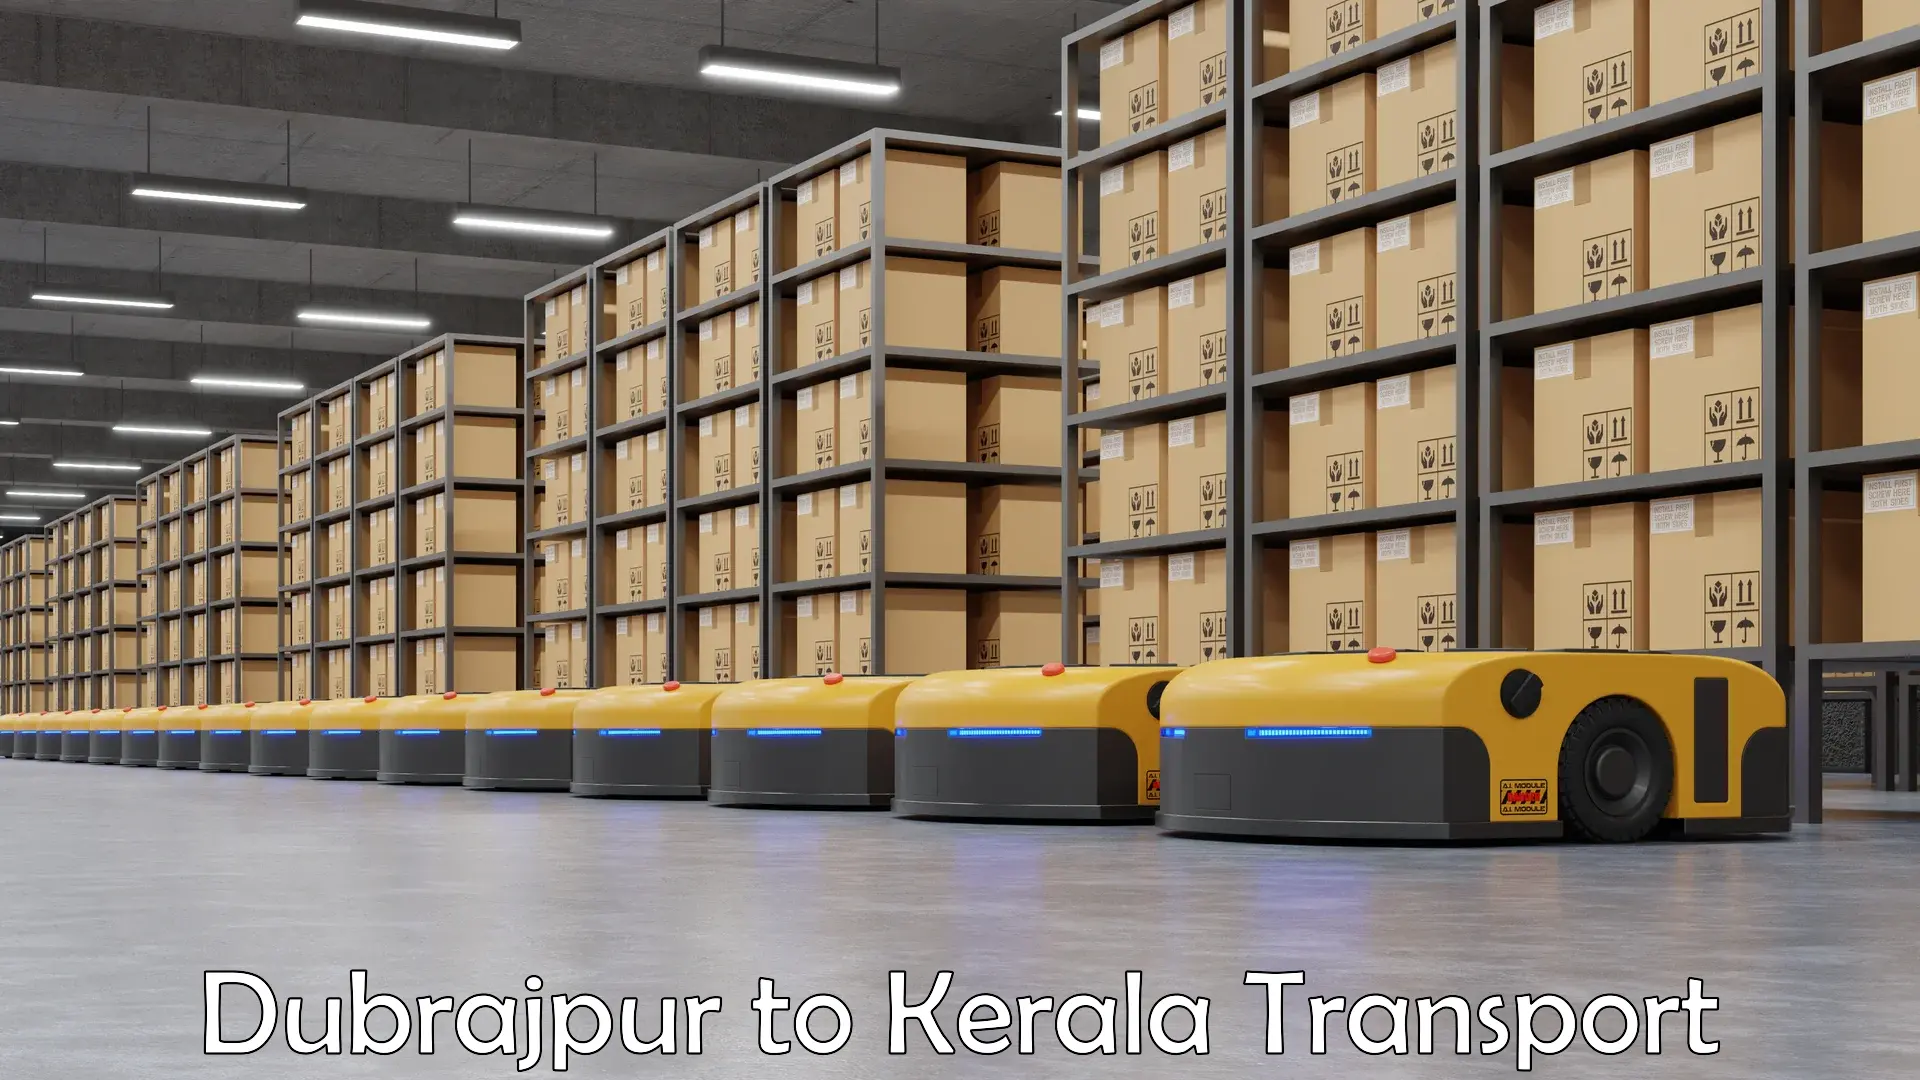 Transport in sharing Dubrajpur to Kochi